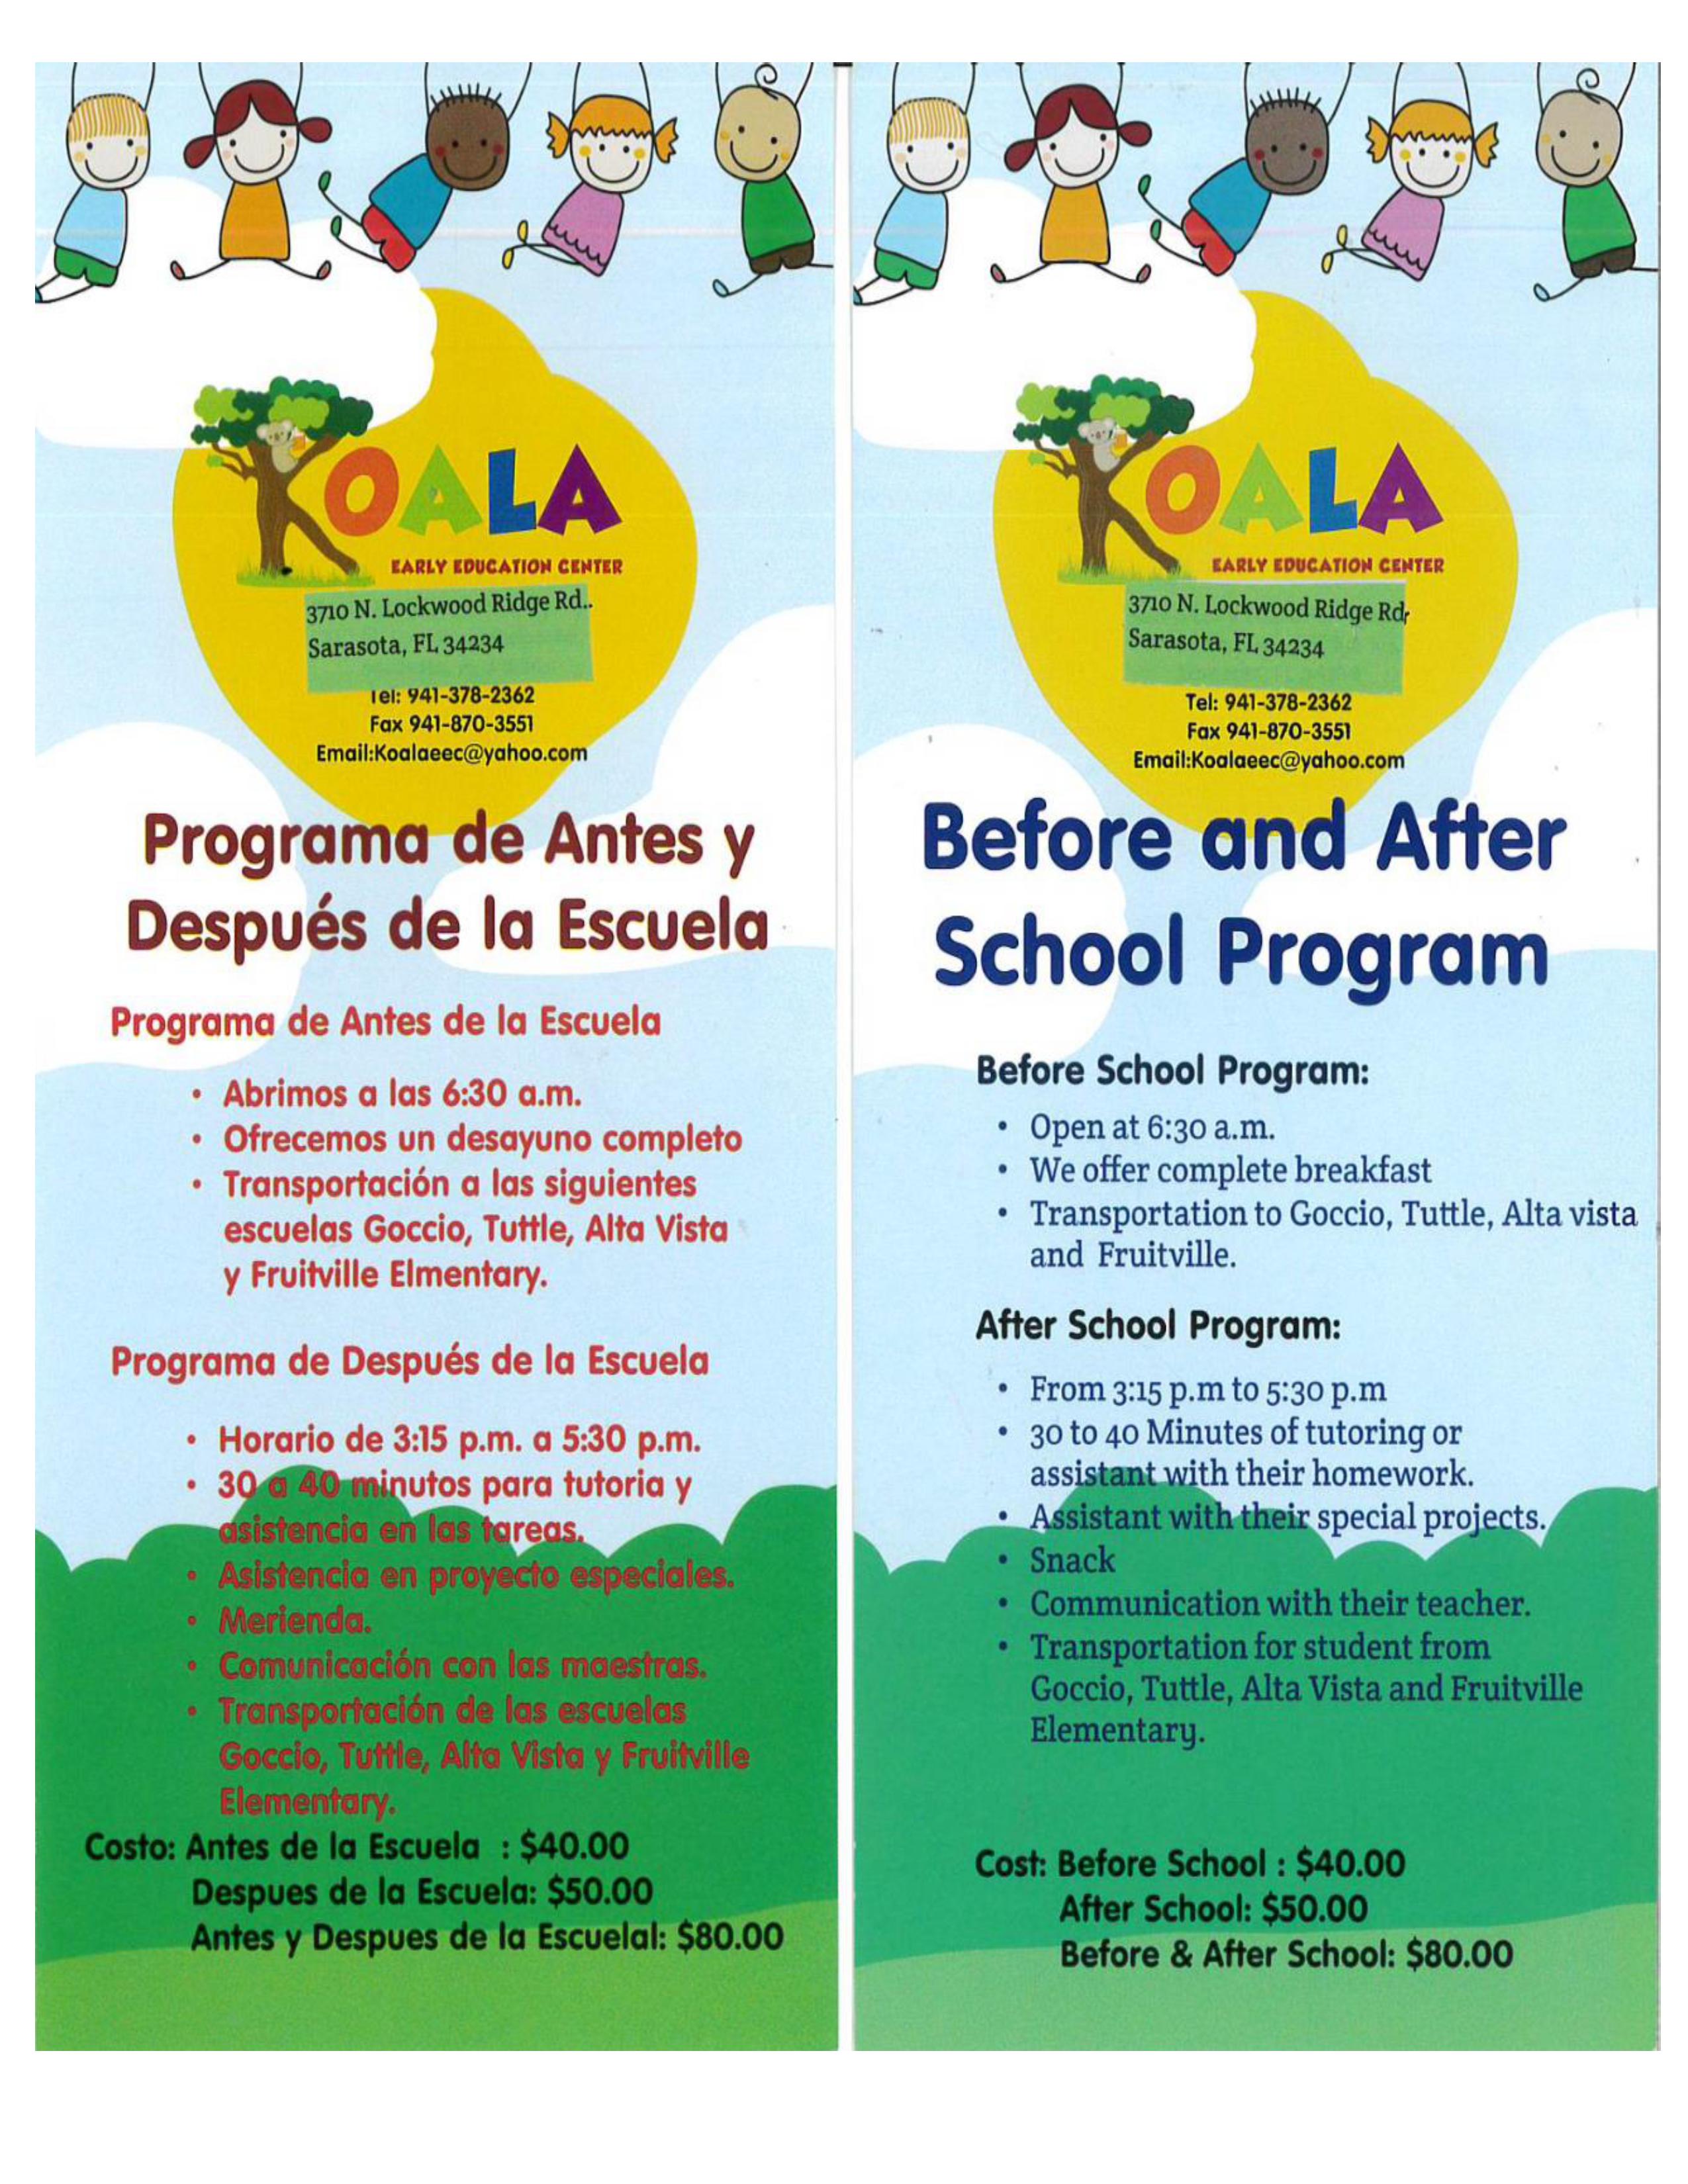 koala-early-education-center-inc-day-care-and-preschool-programs